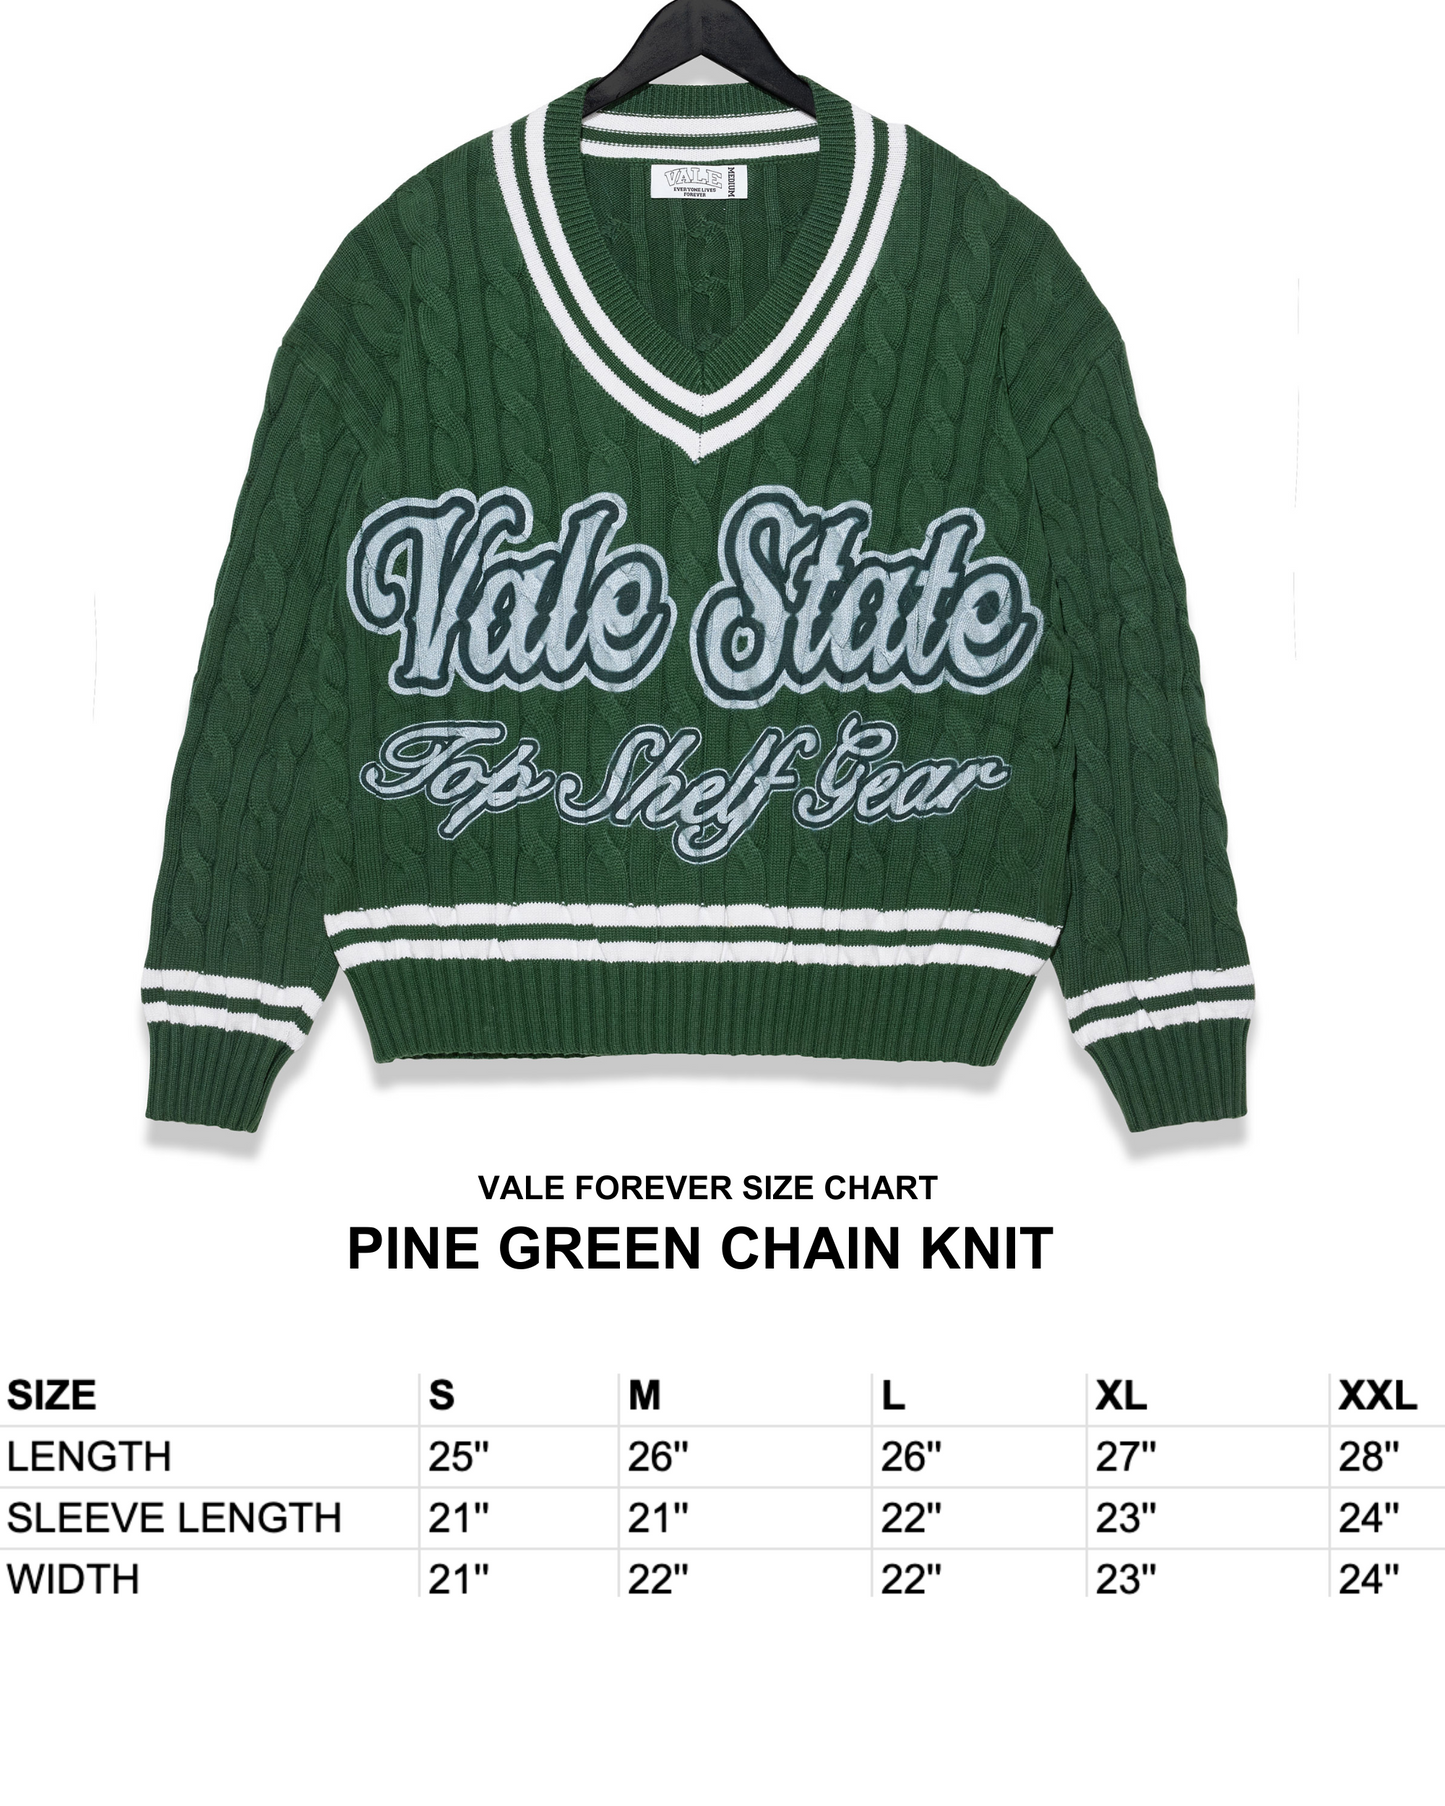 PINE GREEN CHAIN KNIT